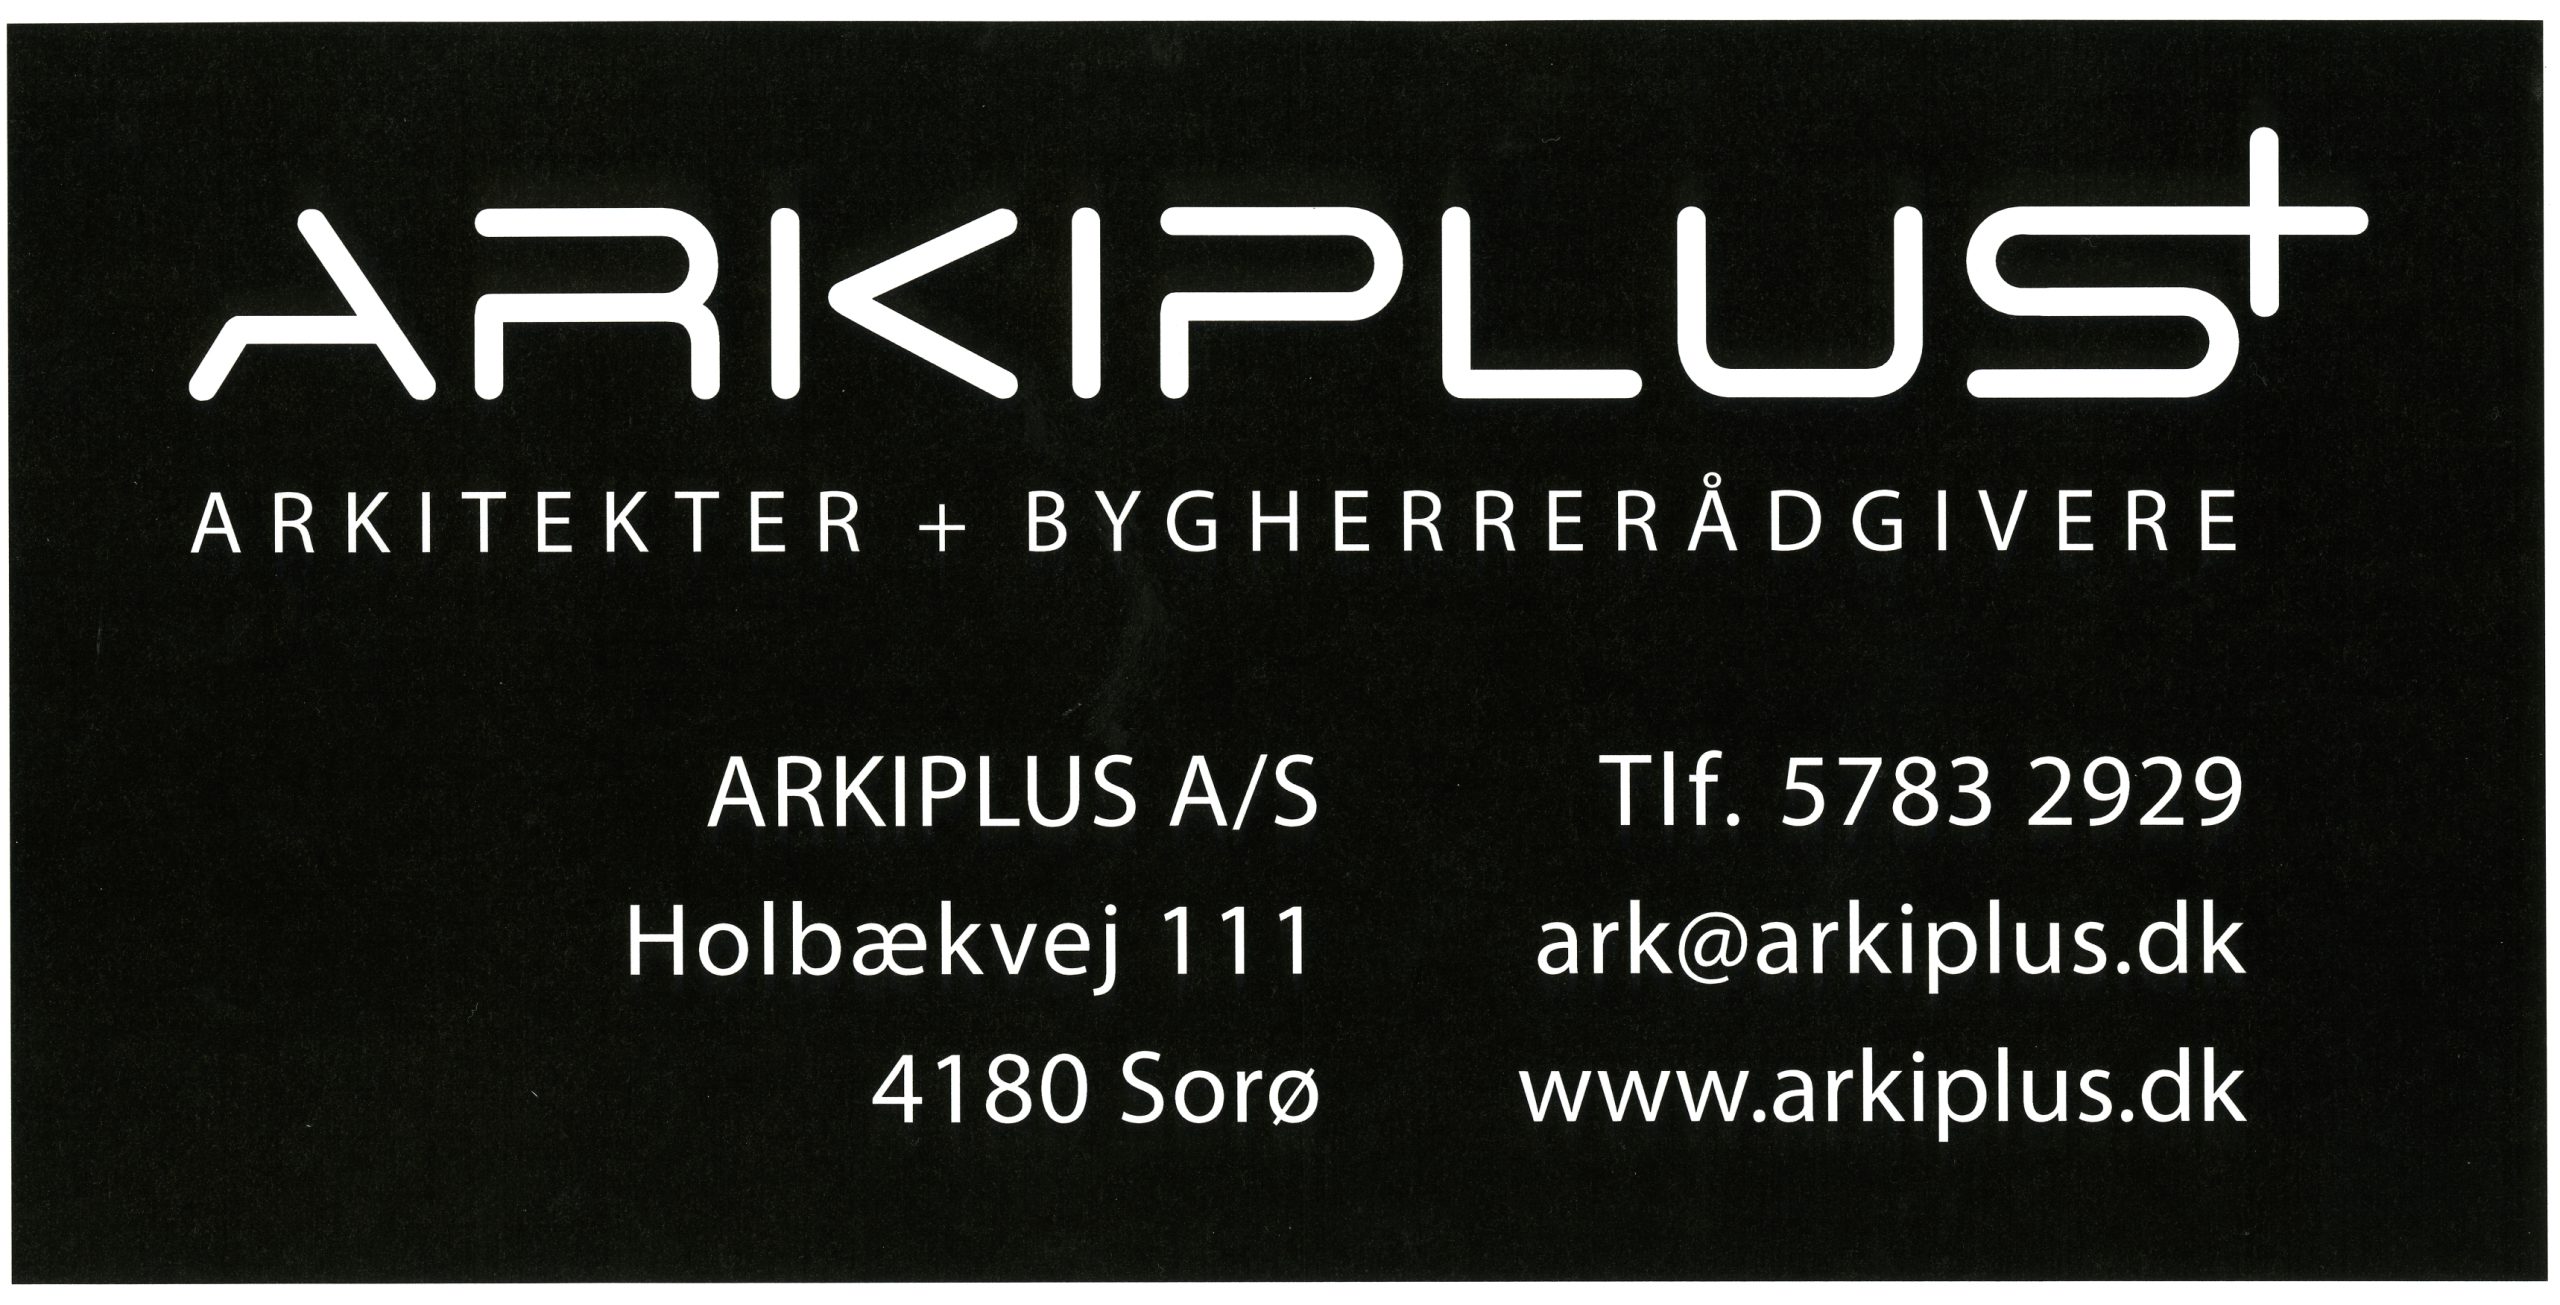 2021.08.16 - Arkiplus logo